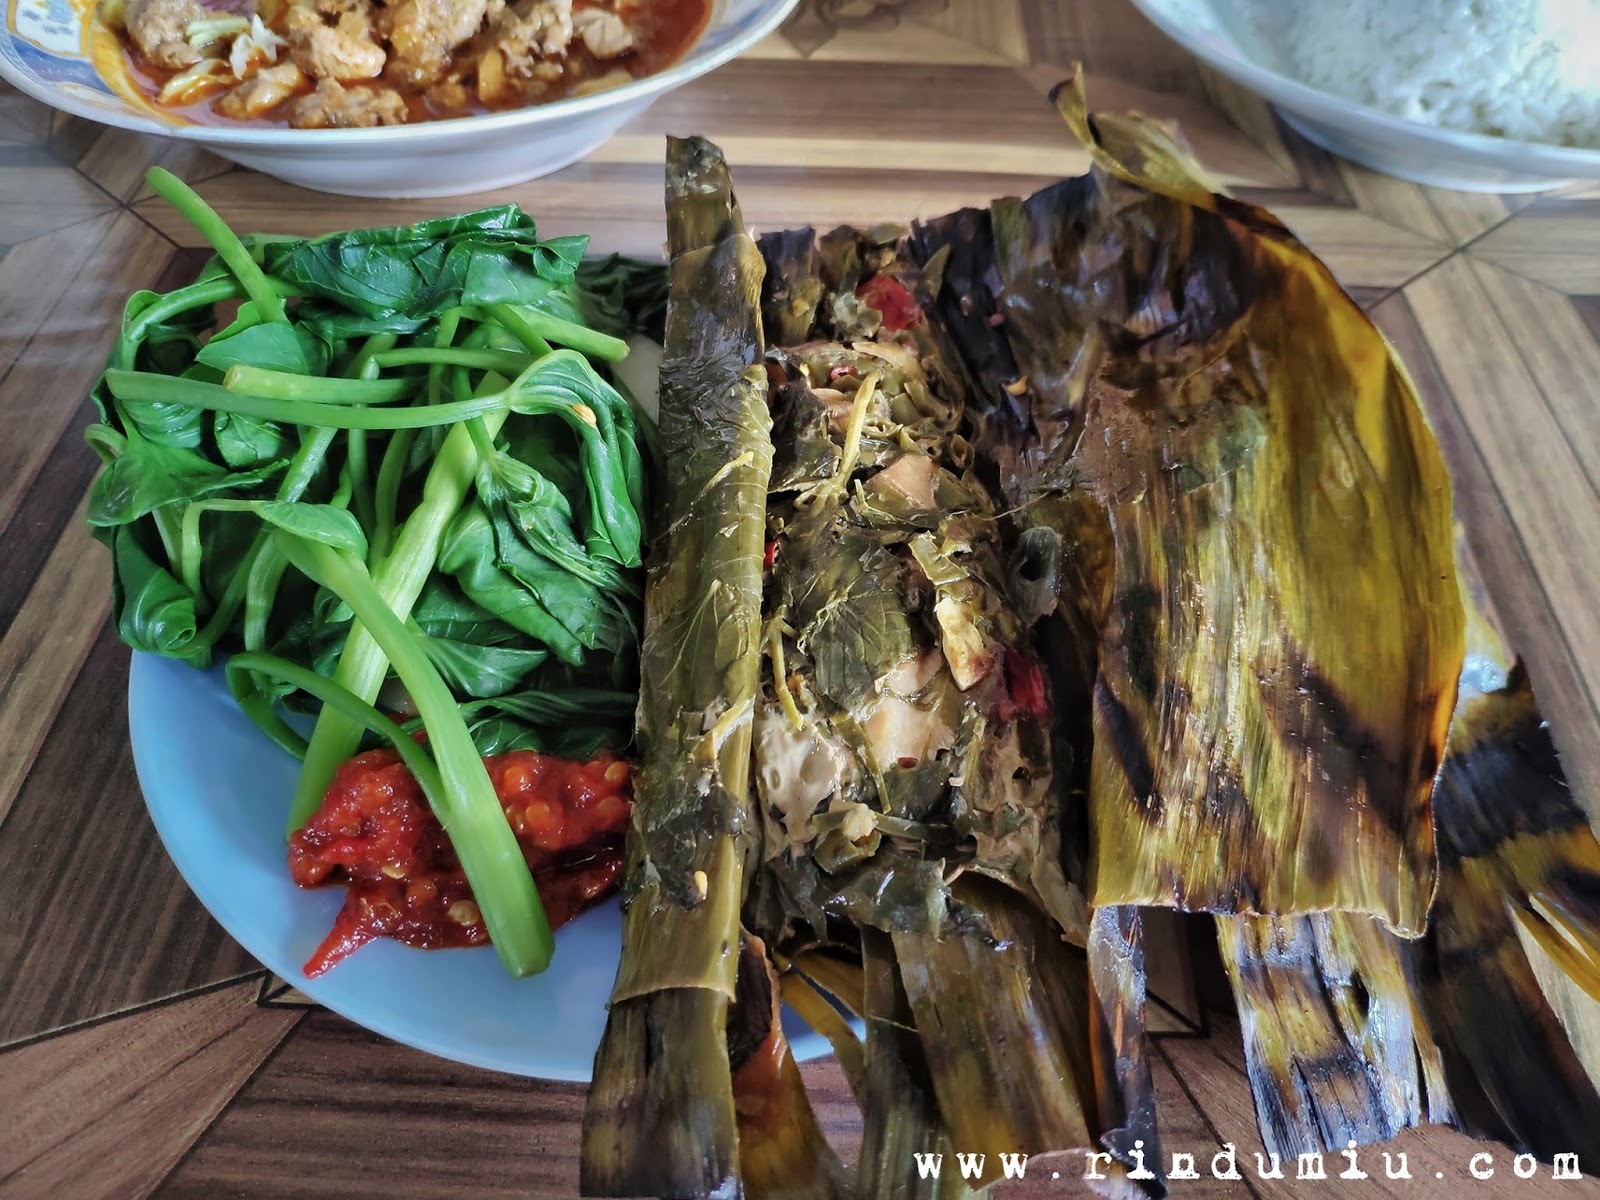 tuna stew curry-like dish at waung makan hercules in pogung kidul jogja